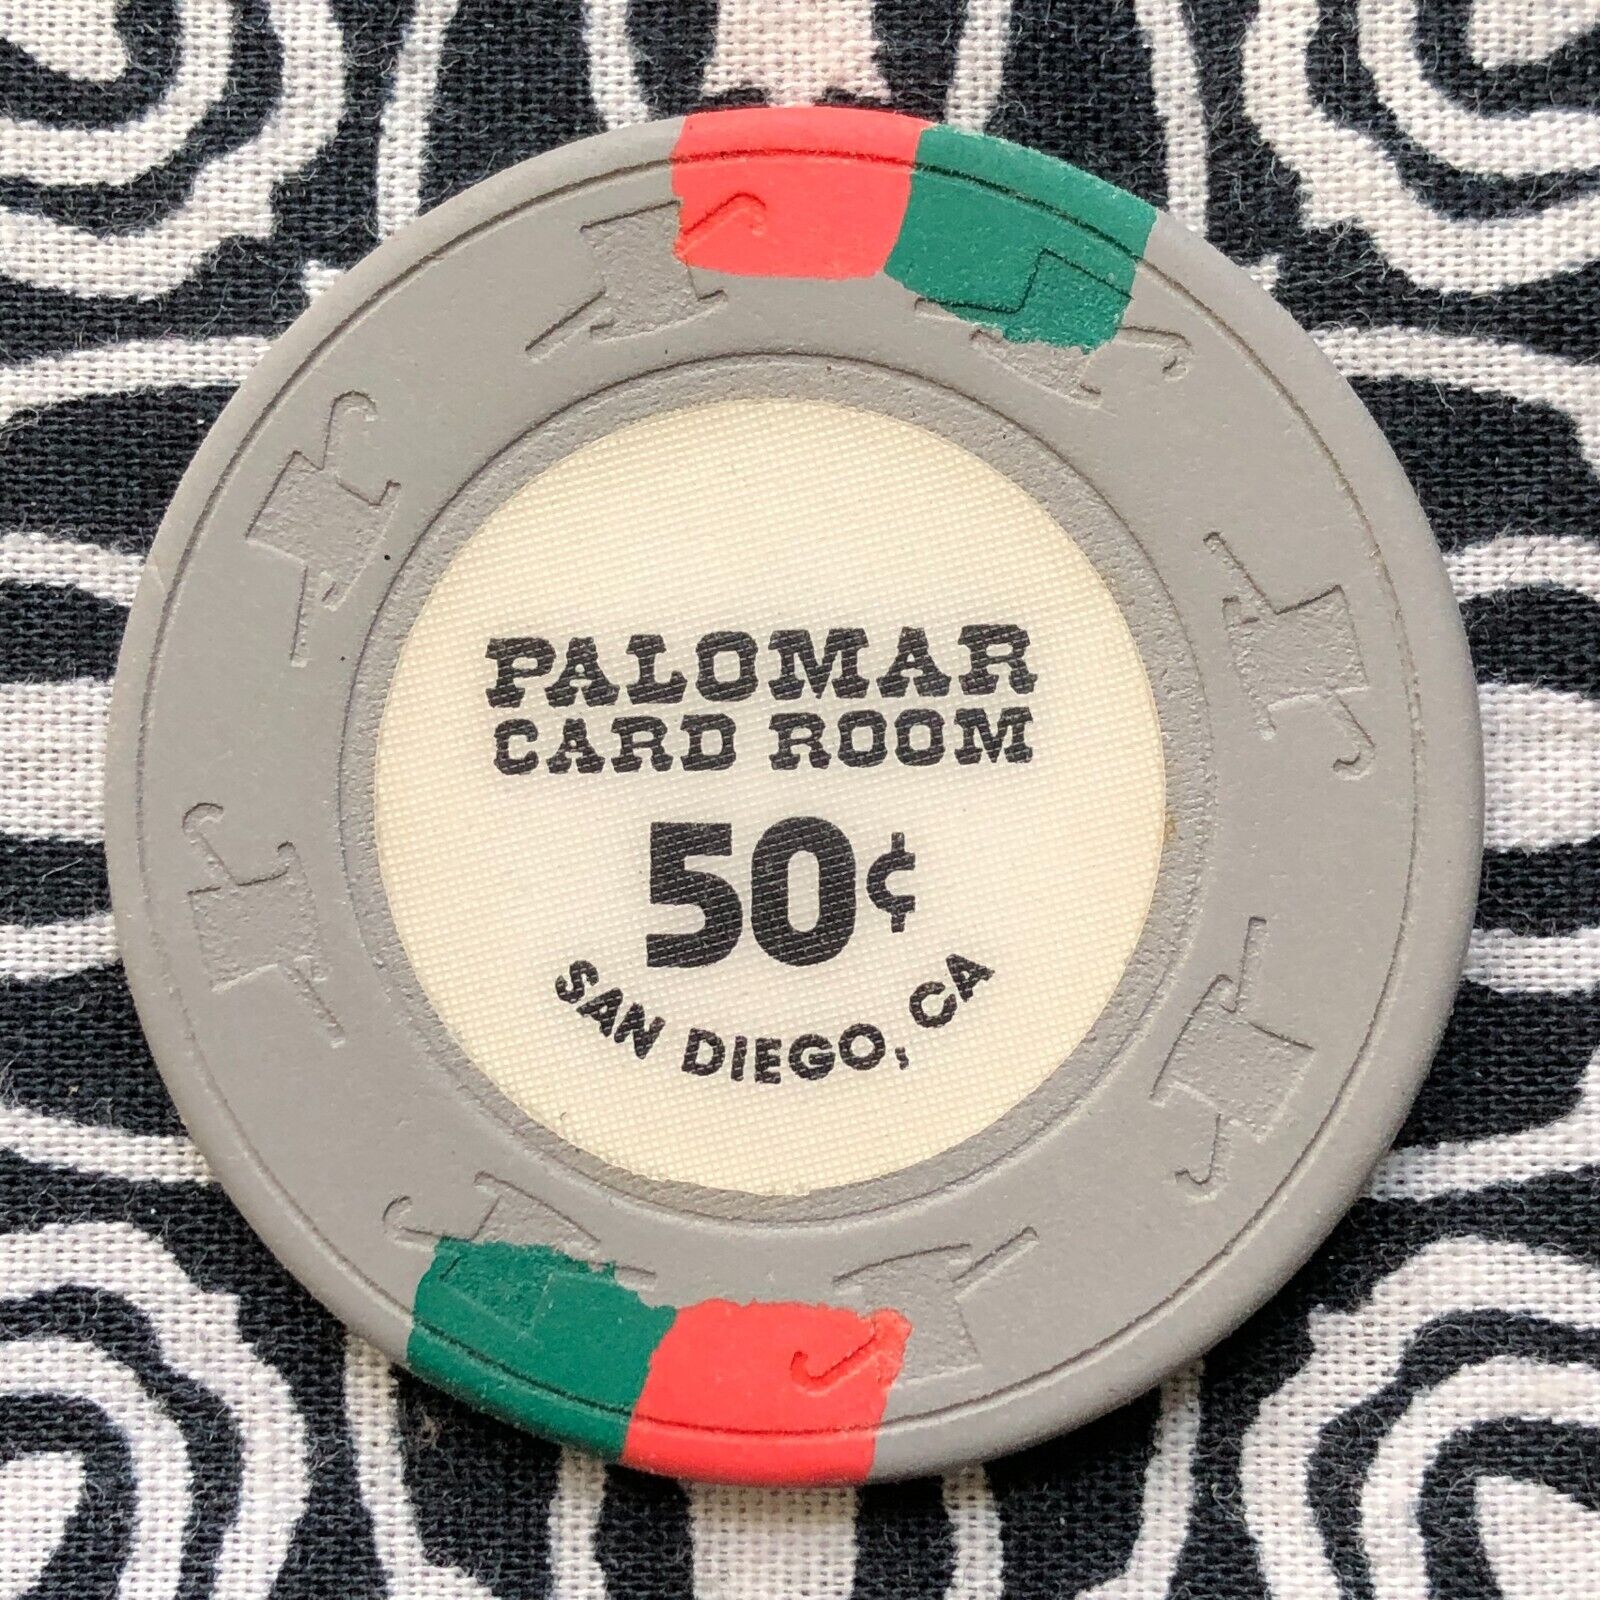 Palomar Card Room 50c $0.50 San Deigo, California Gaming Poker Casino Chip QX5